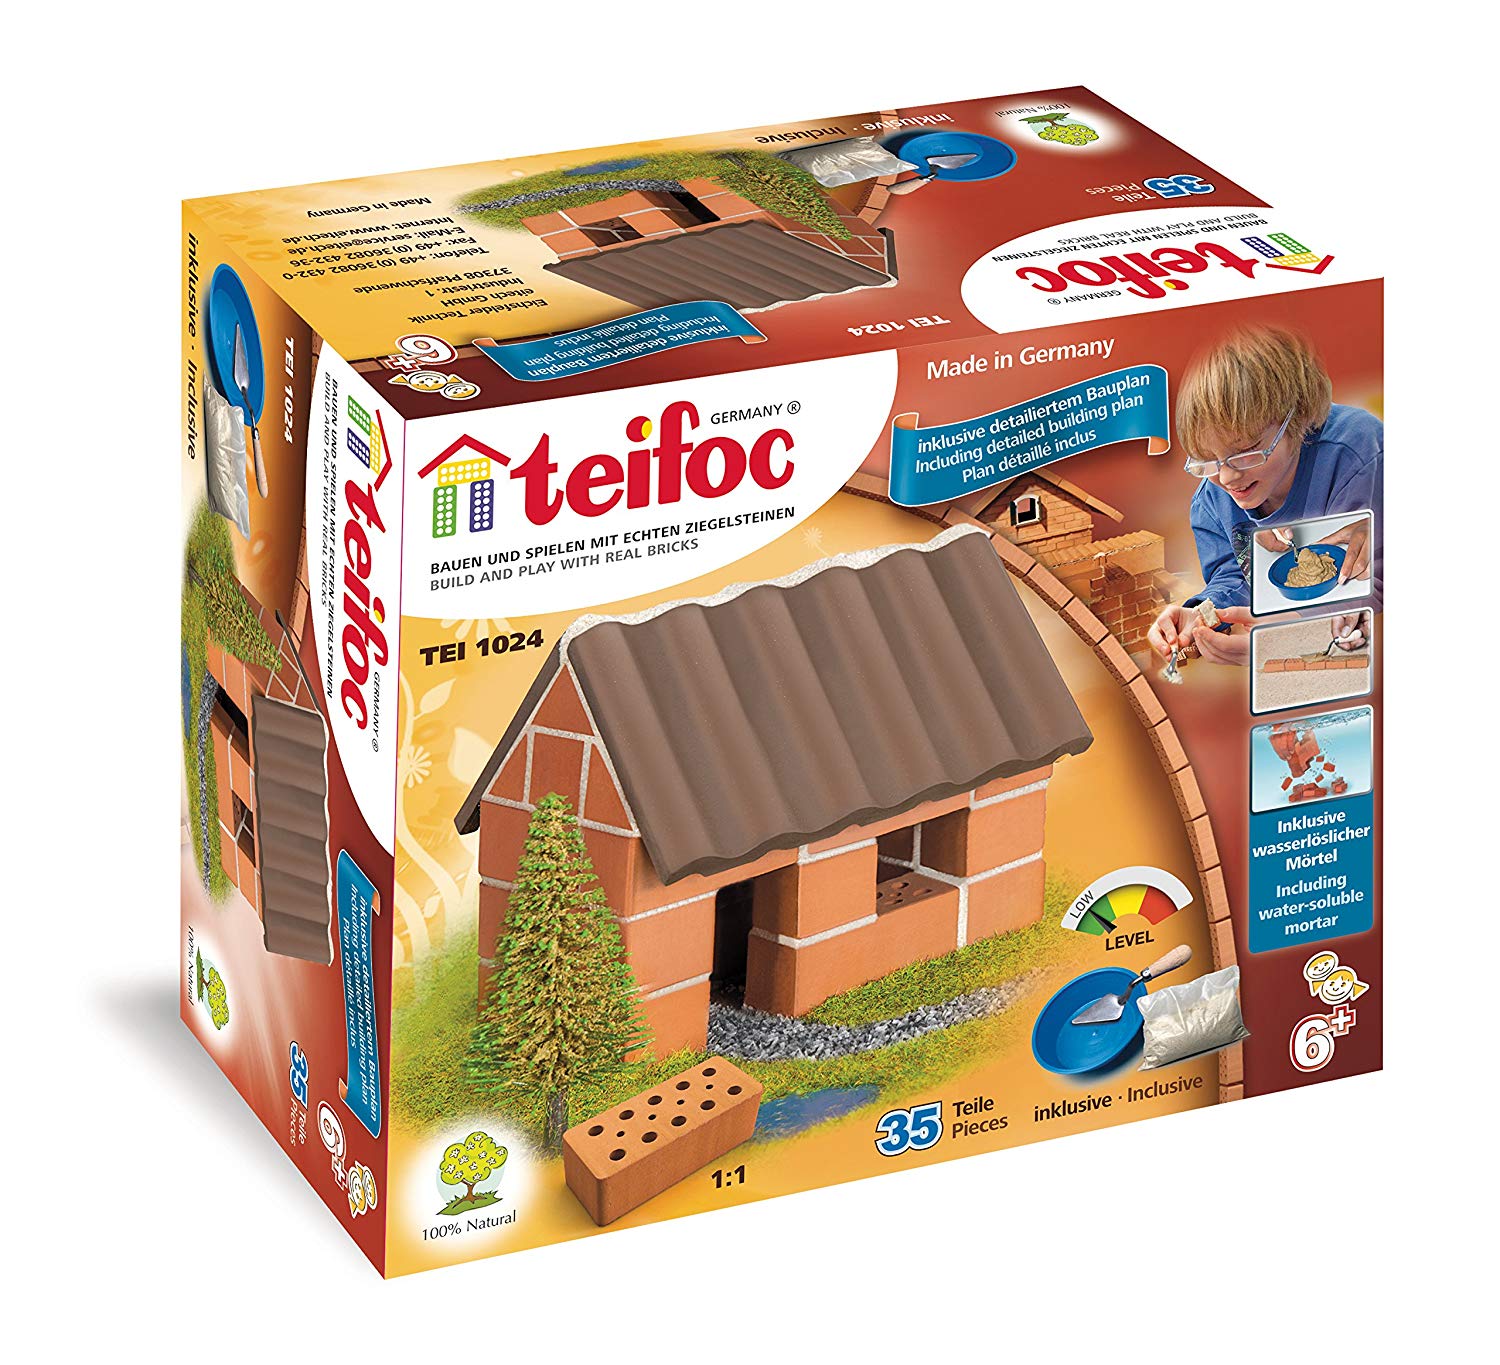 Eitech Teifoc Tei Kit Small Detached House With Real Bricks